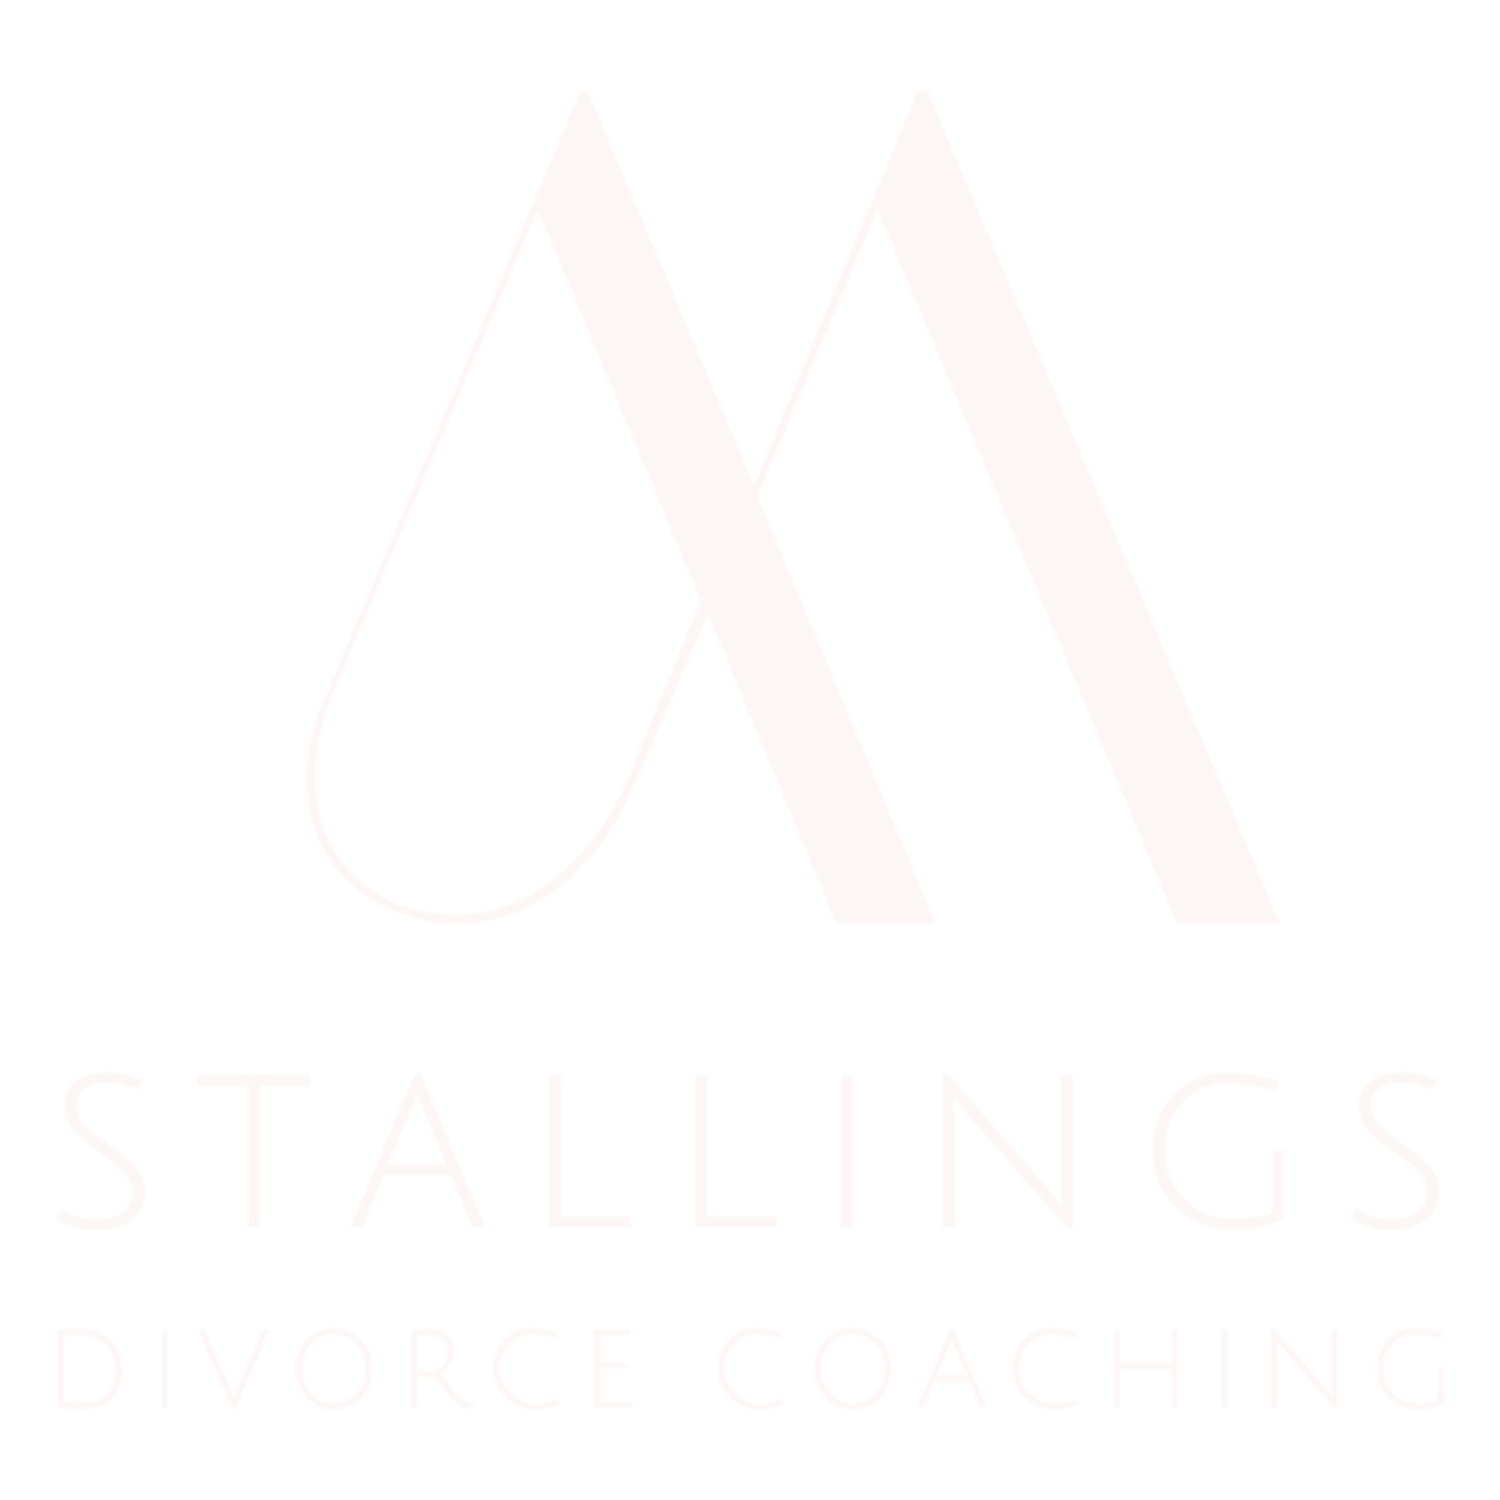 Stallings Divorce Coaching